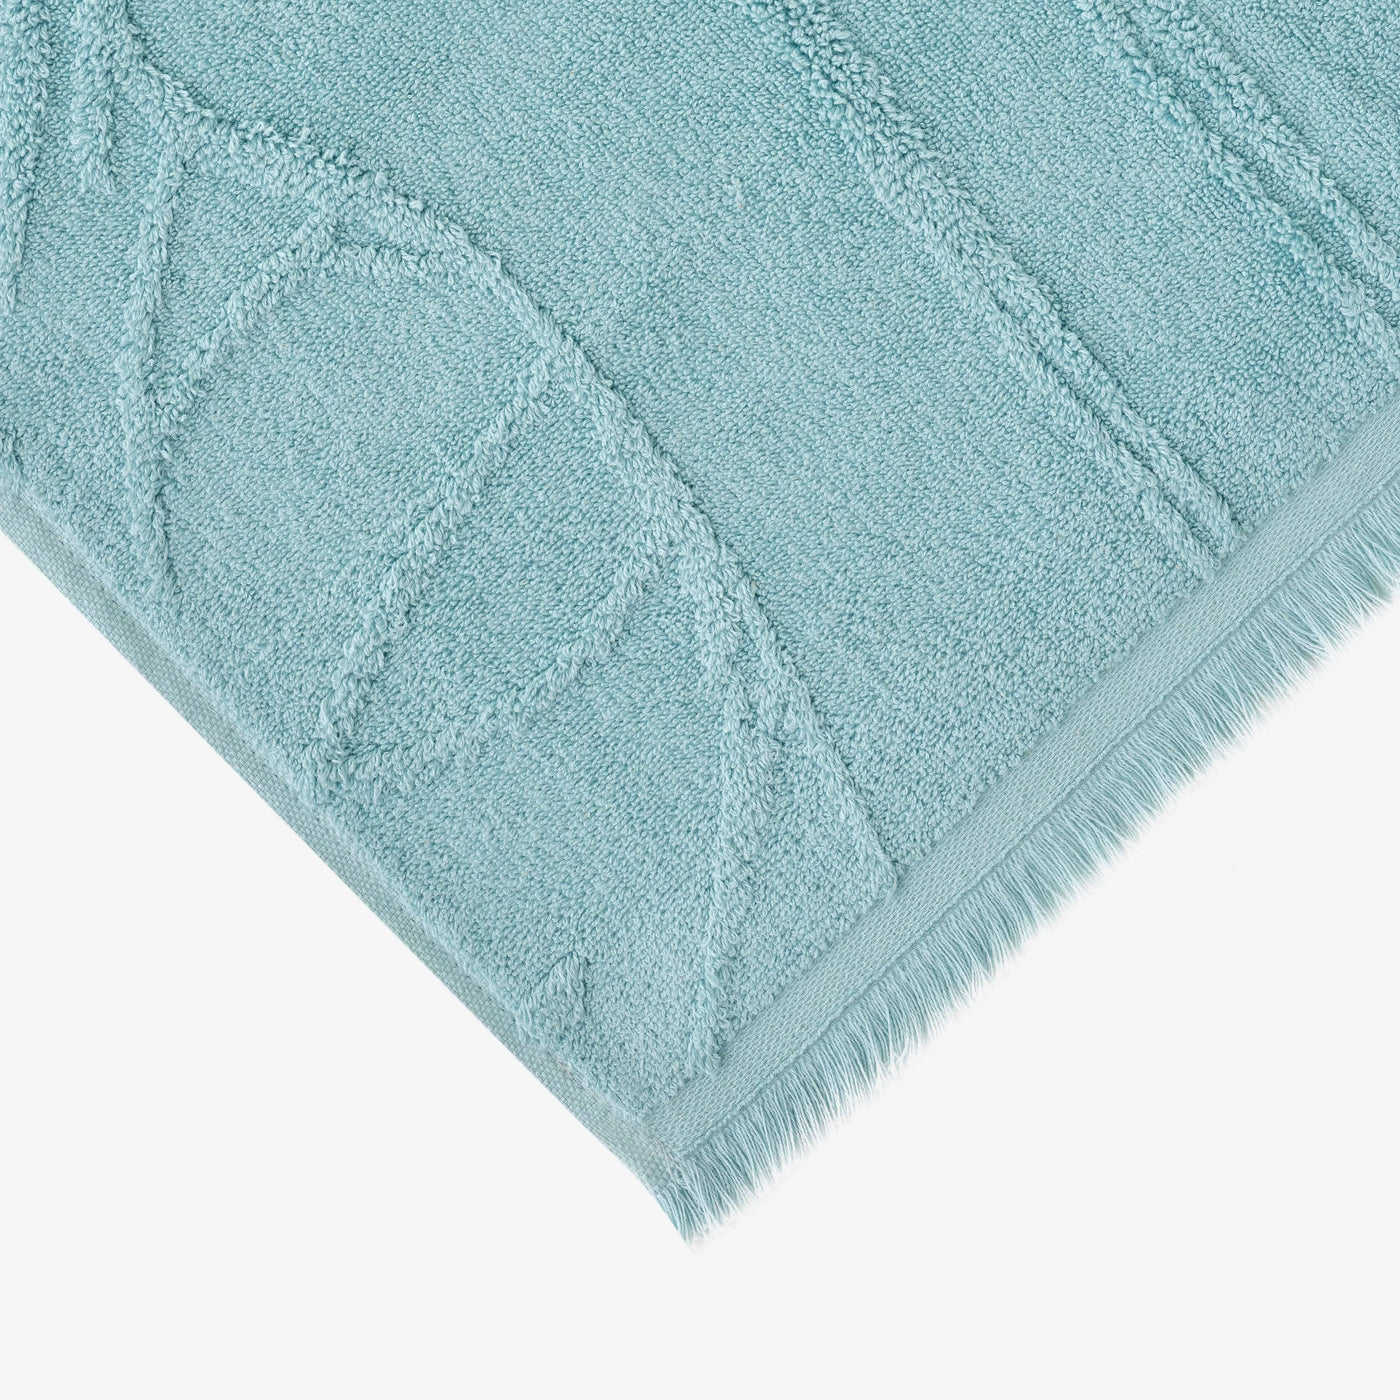 Barbara Set of 2 Jacquard Fringed 100% Turkish Cotton Hand Towels, Light Green Hand Towels sazy.com